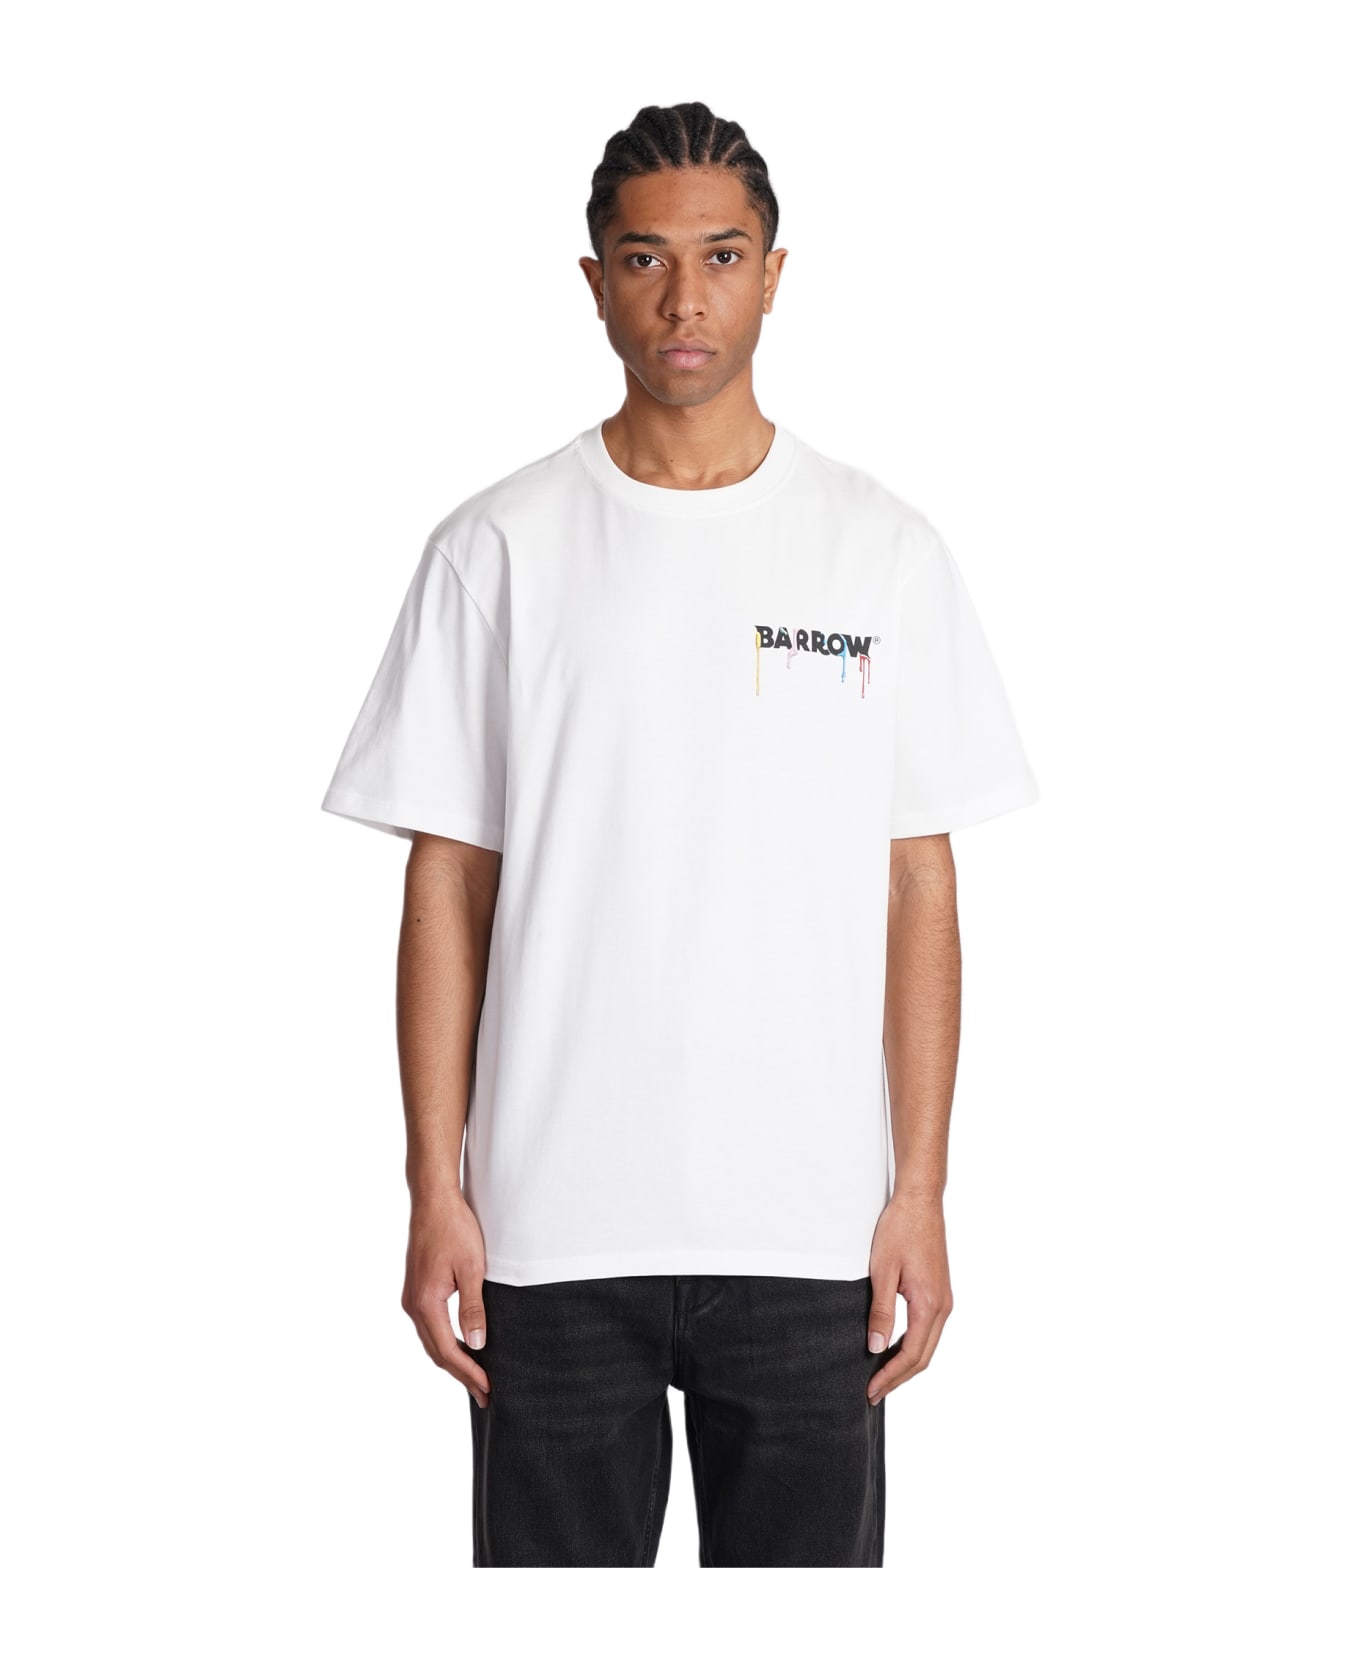 Barrow White T-shirt With Barrow Spots Print - White Tシャツ